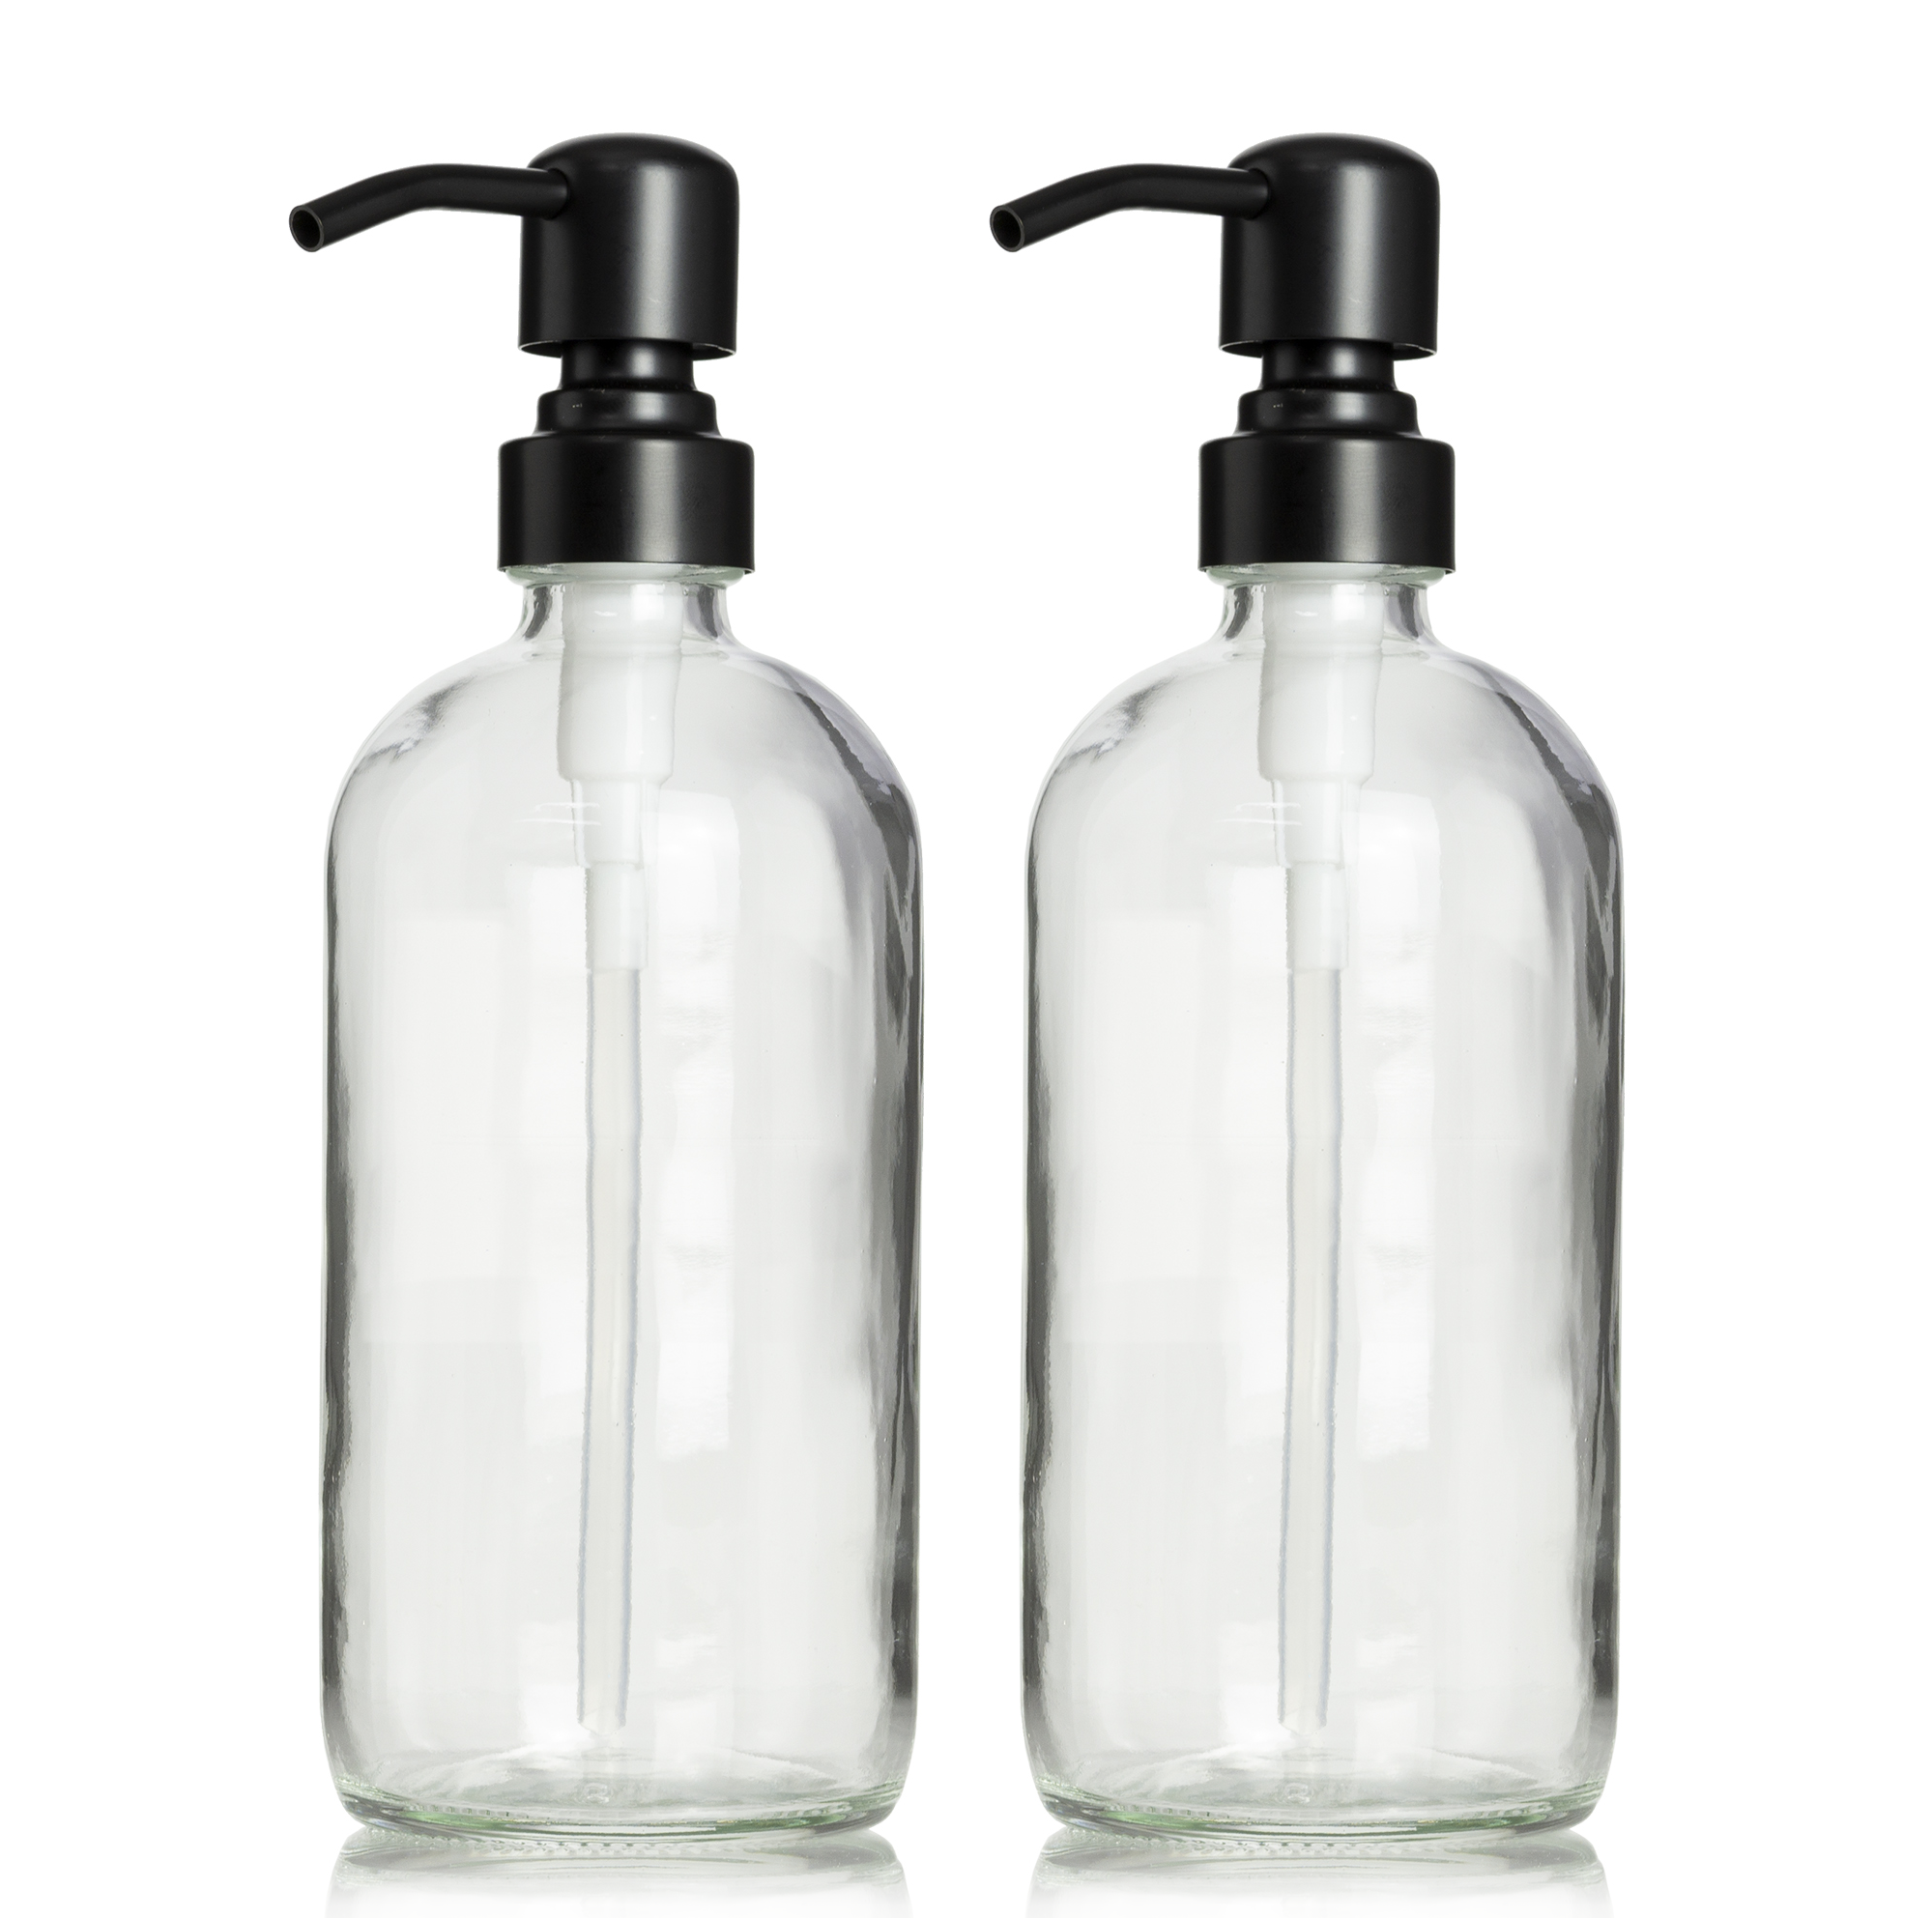 2 Clear Glass 16 oz Boston Round Soap Dispenser Pump Bottles